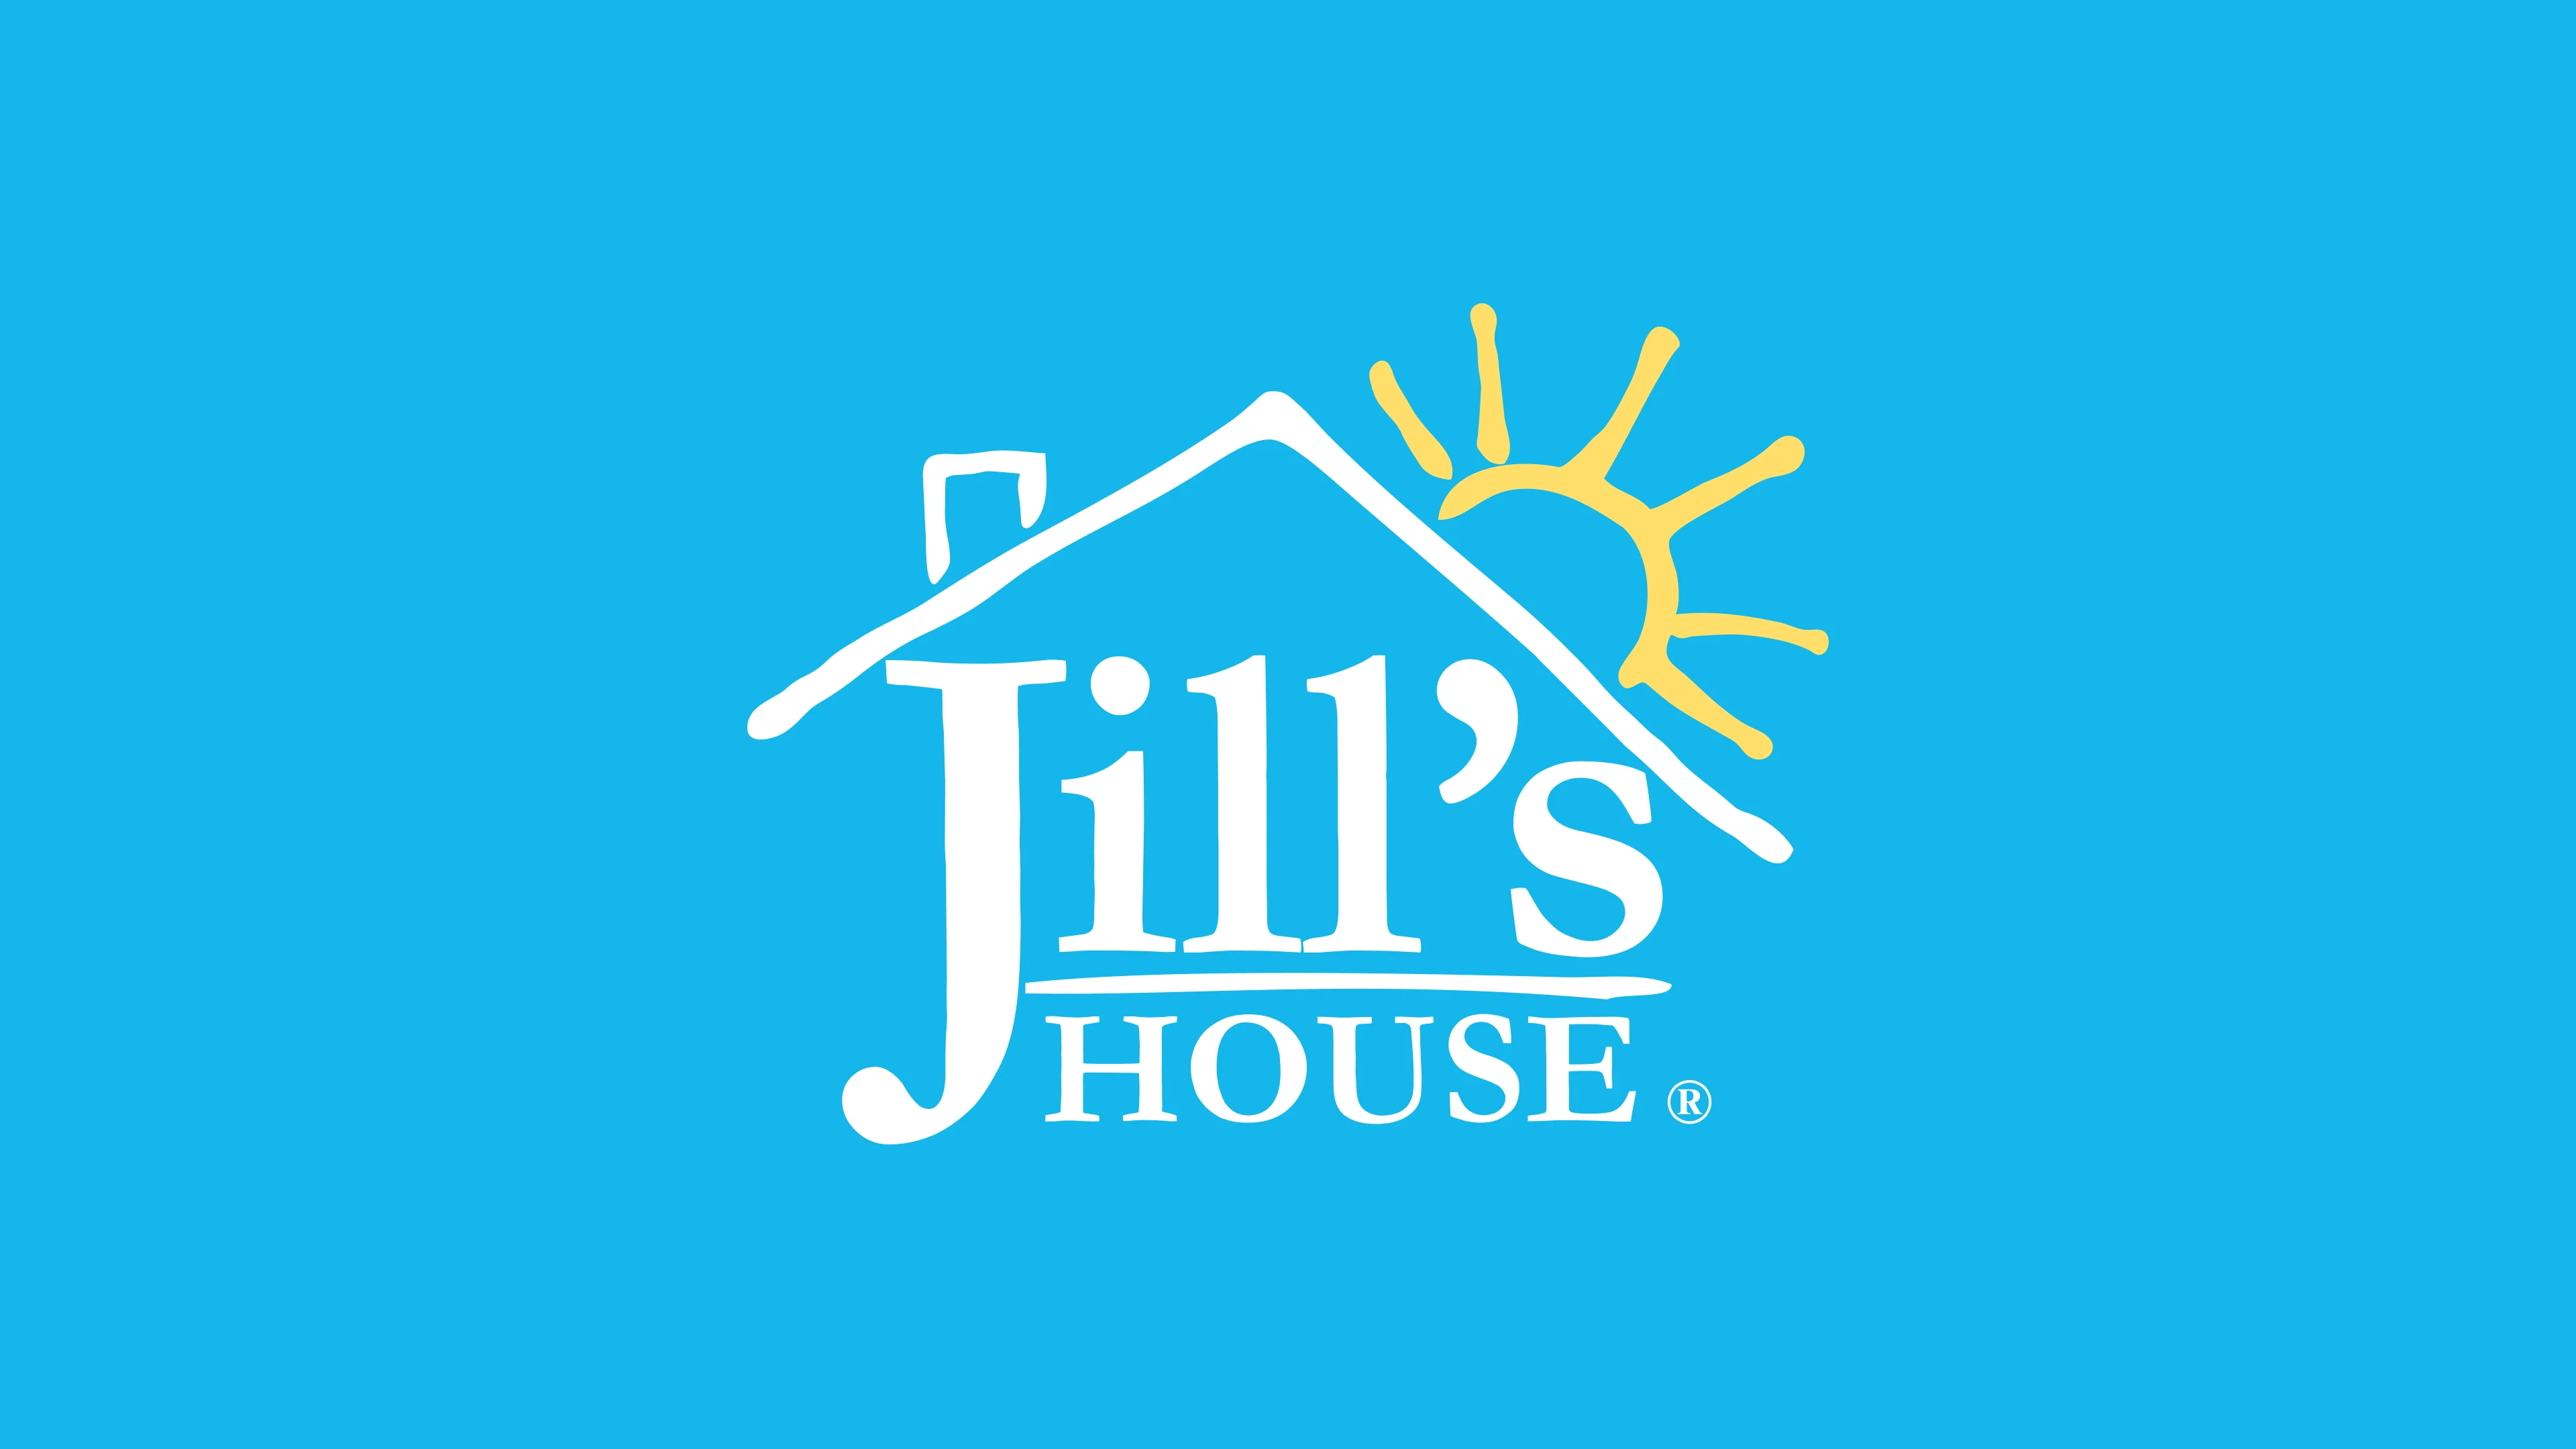 jills house logo